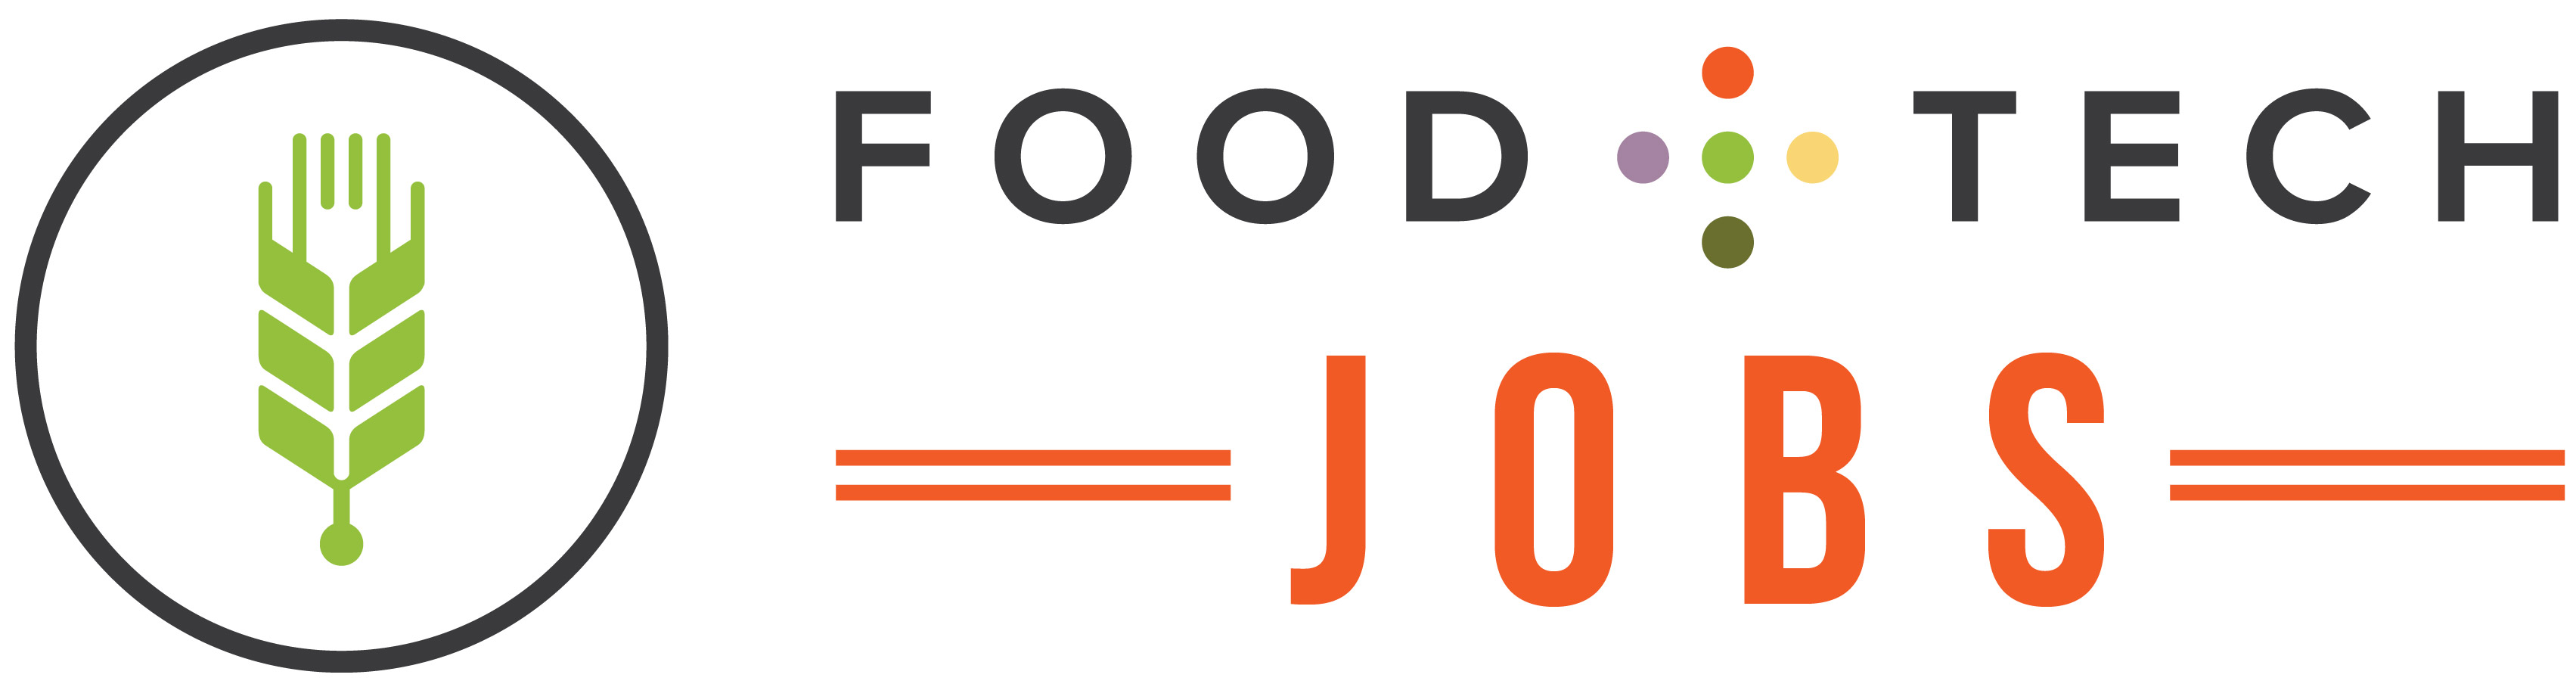 🥖🥖coinbase tech support☎{1-805-250-6342}☎number - Food+Tech Jobs